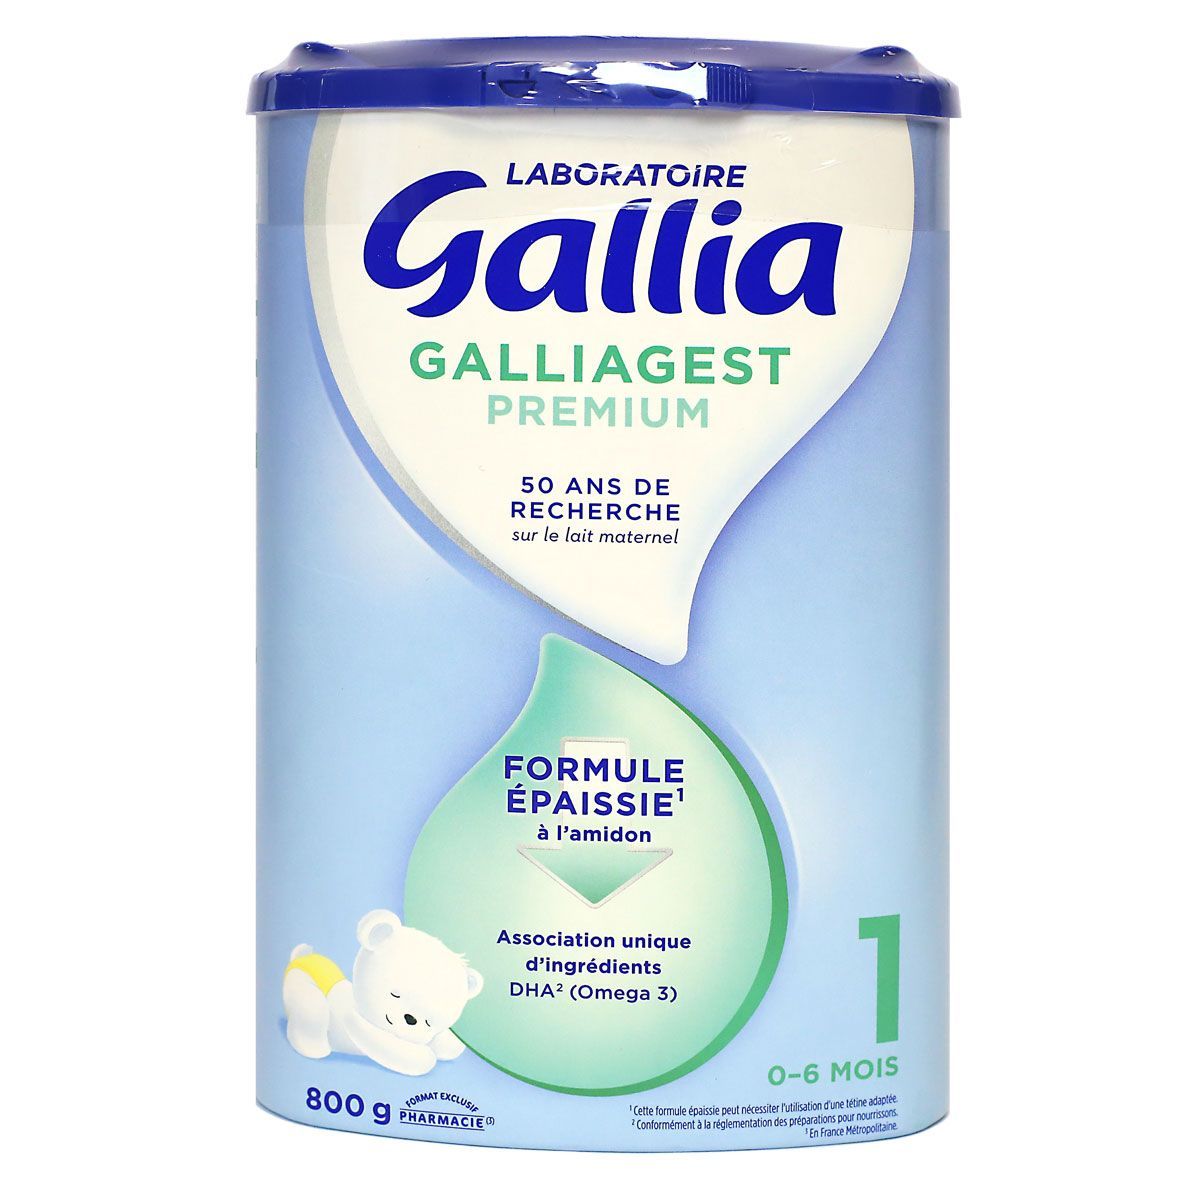 Gallia Calisma Lait 1er âge